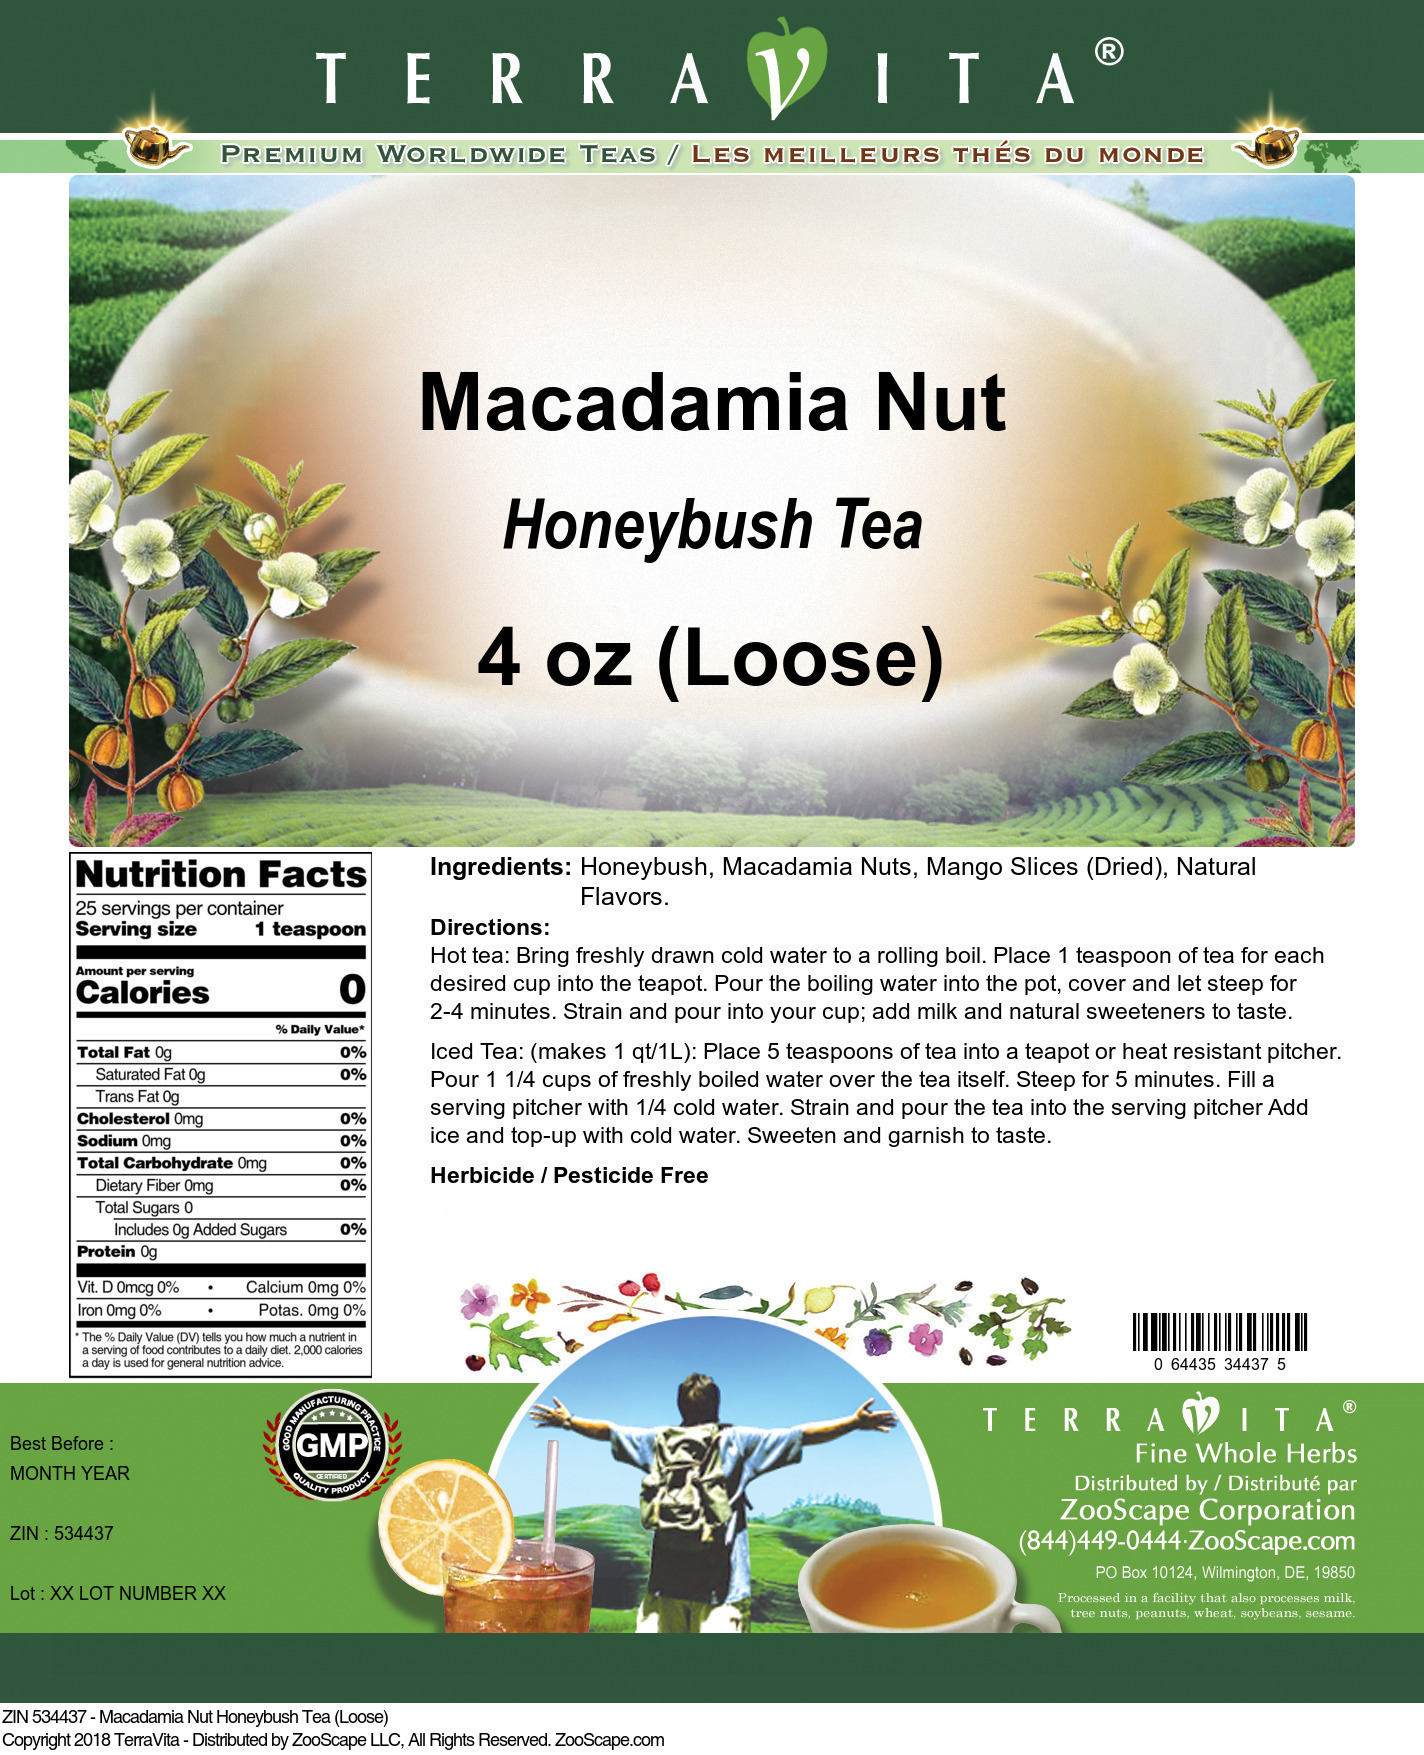 Macadamia Nut Honeybush Tea (Loose) - Label